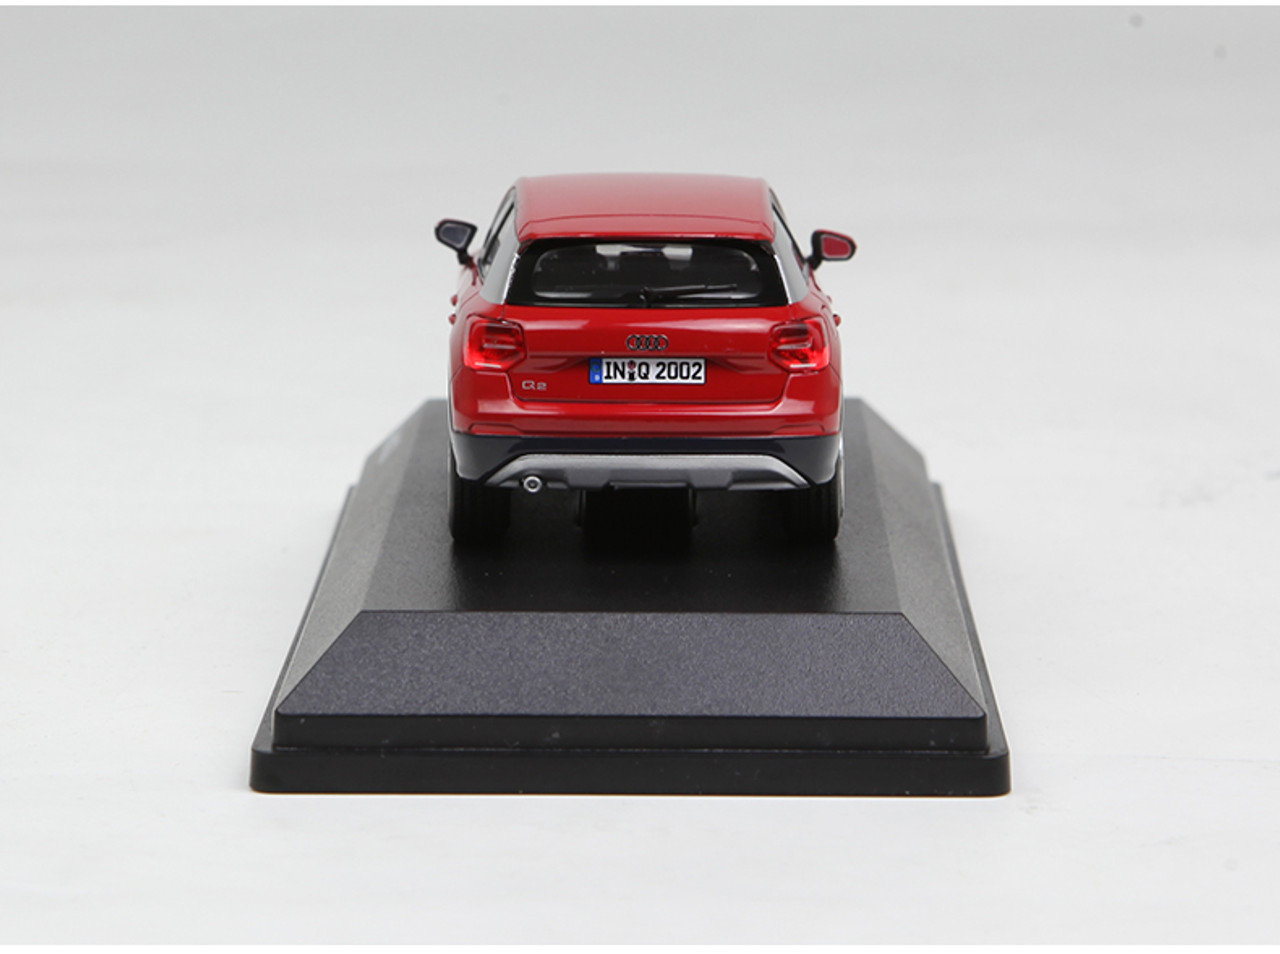 1/43 Dealer Edition Audi Q2 (Red) Enclosed Diecast Car Model